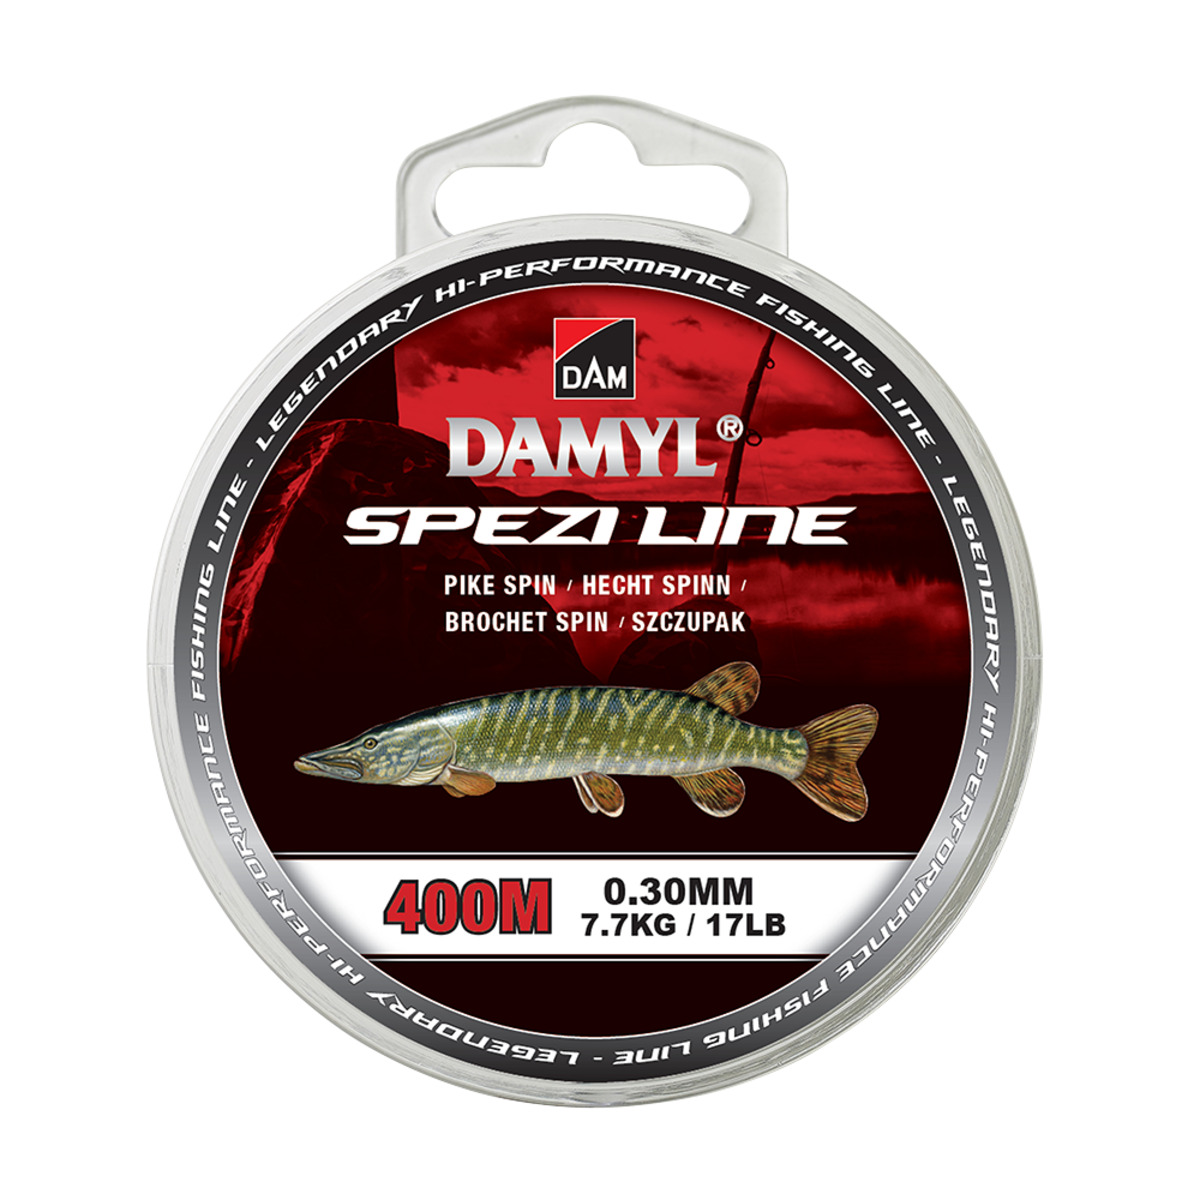 Damyl Spezi Line Pike Spin - 400M 0.30MM 7.7KG 17LBS LIGHT GRE